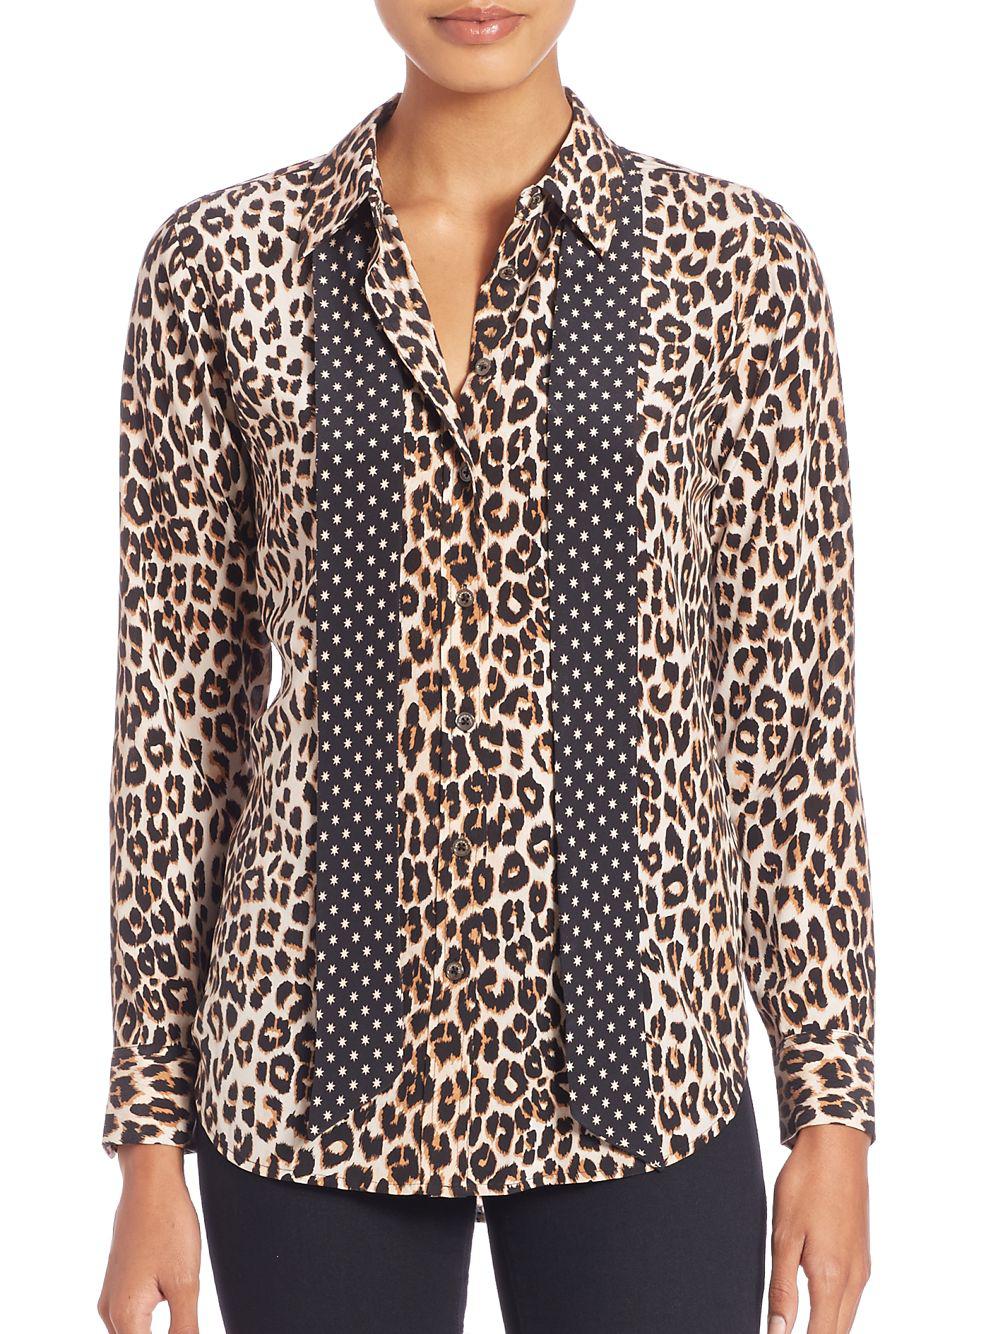 Equipment Kate Moss For Leopard-print Silk Blouse | Lyst